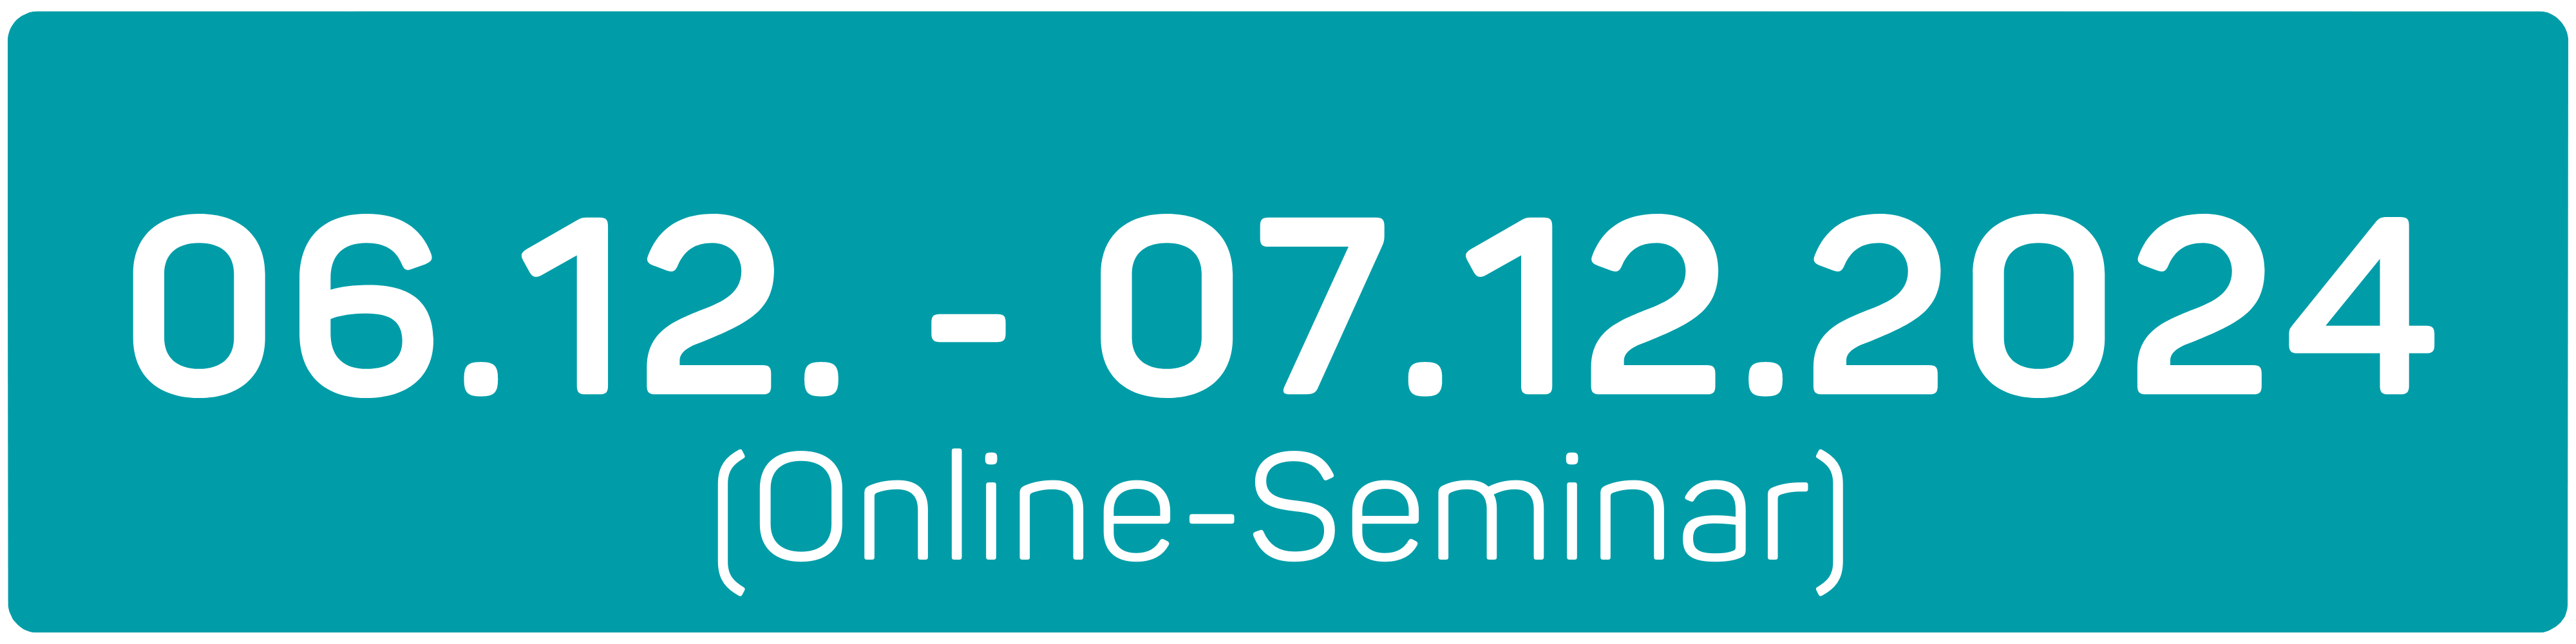 Seminar 06.12.-07.12.2024 (Online-Seminar)